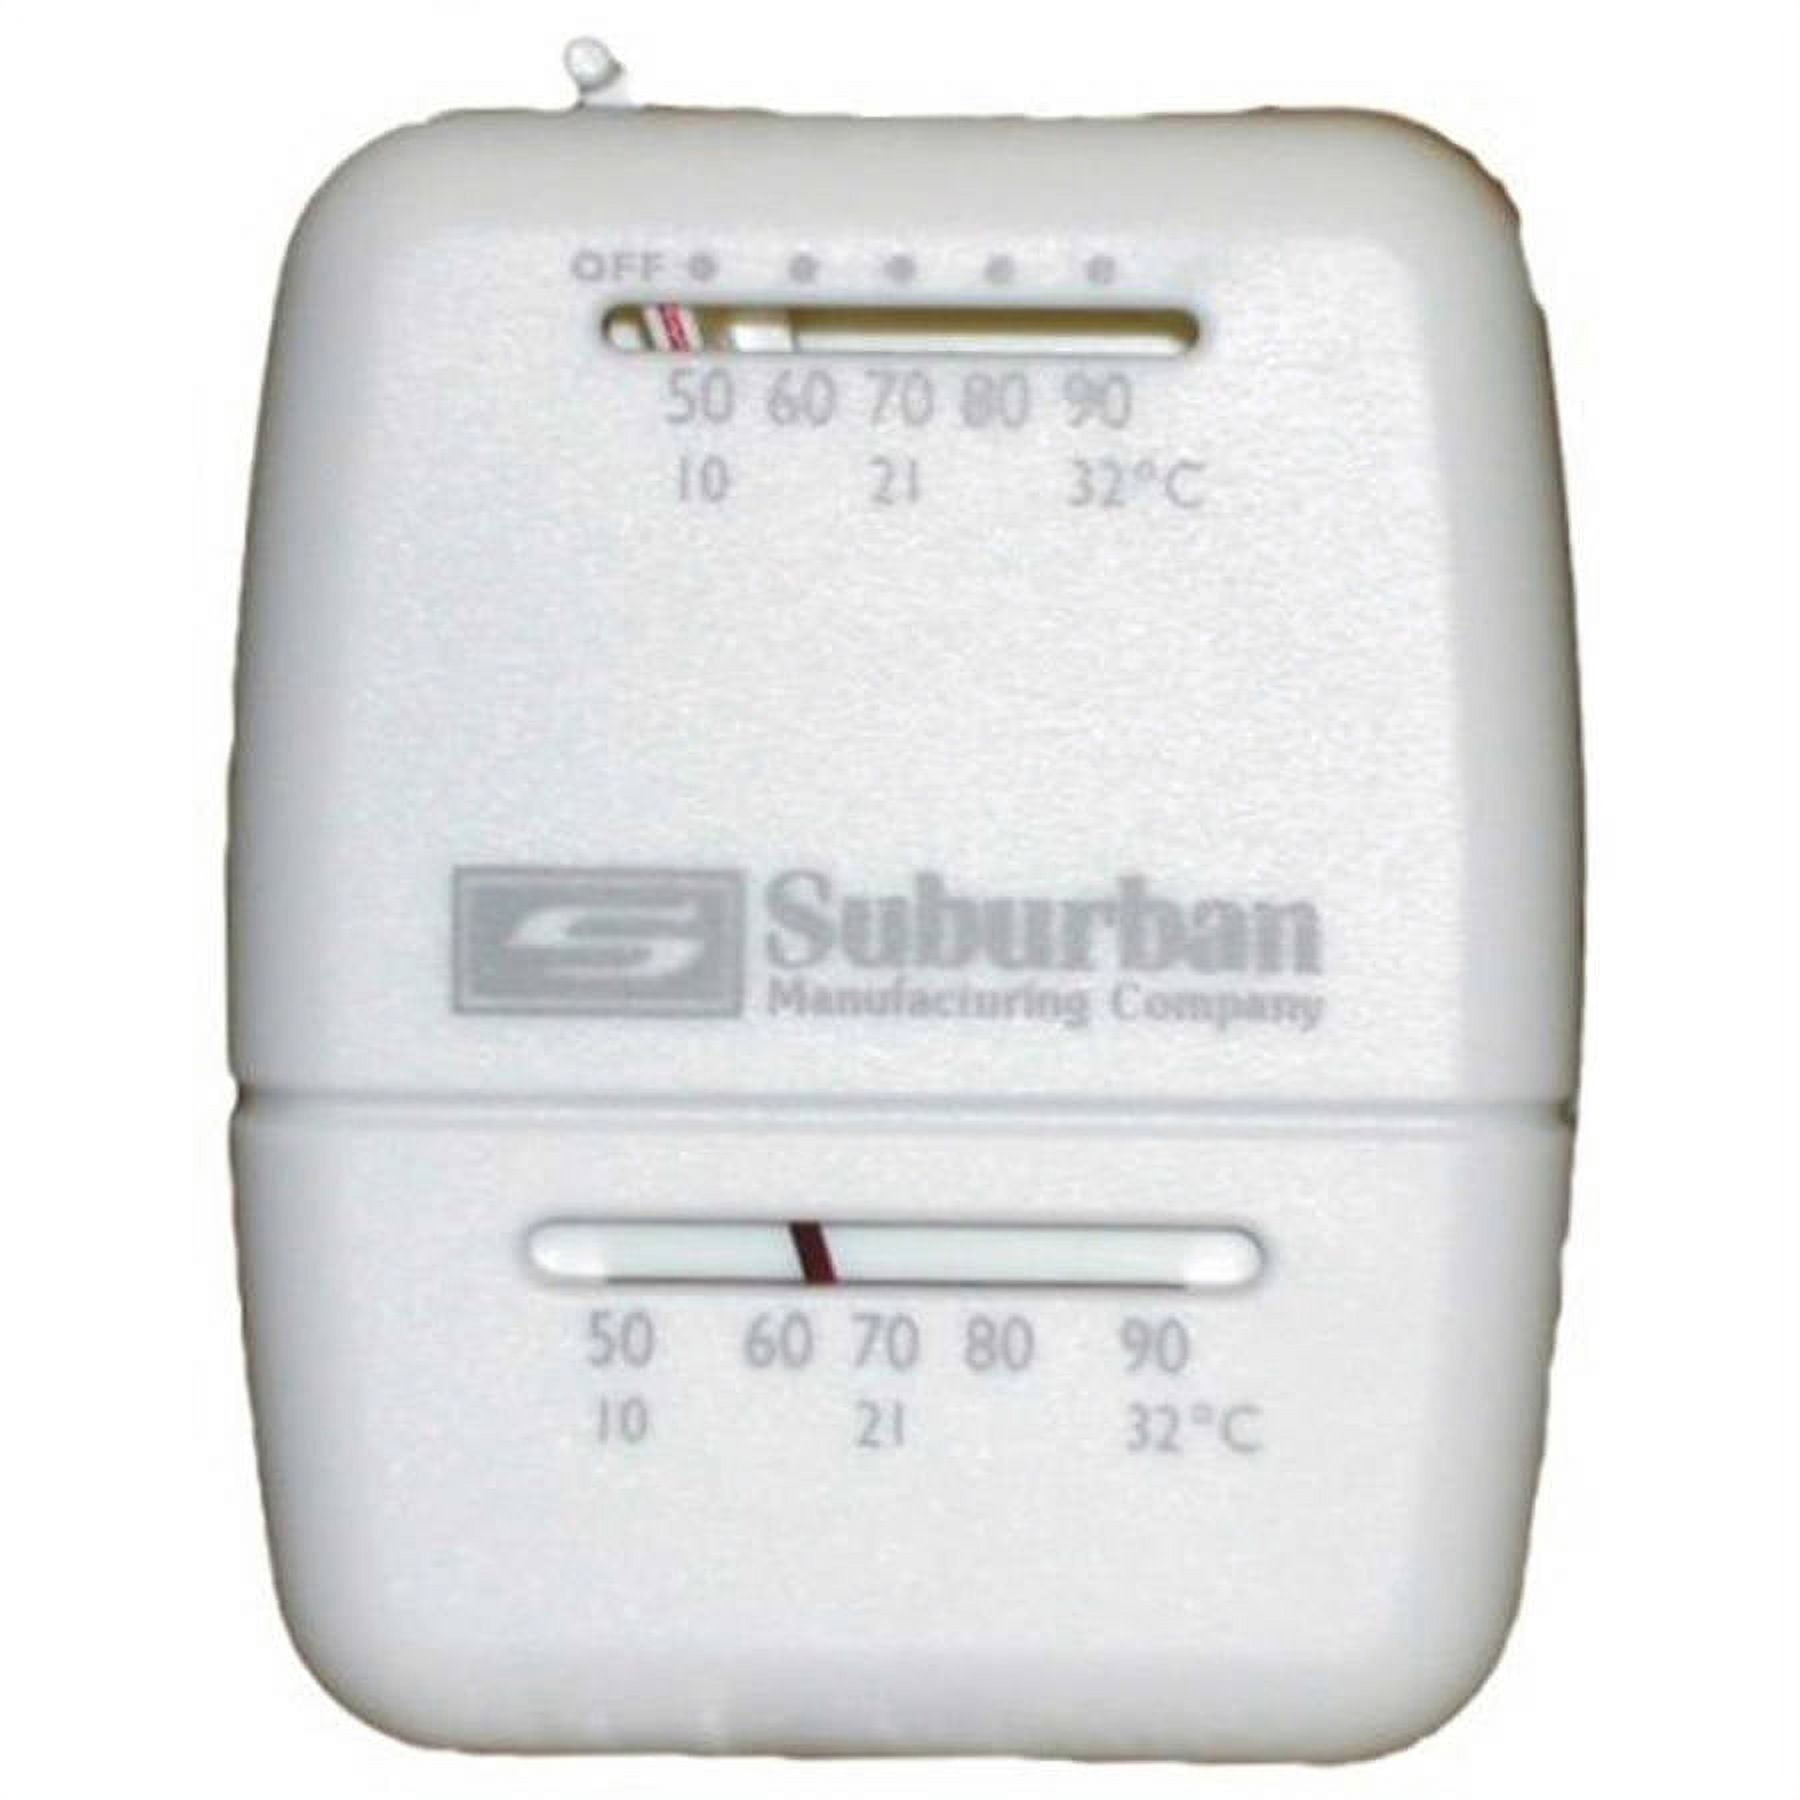 Suburban 161188 Oven Thermostat